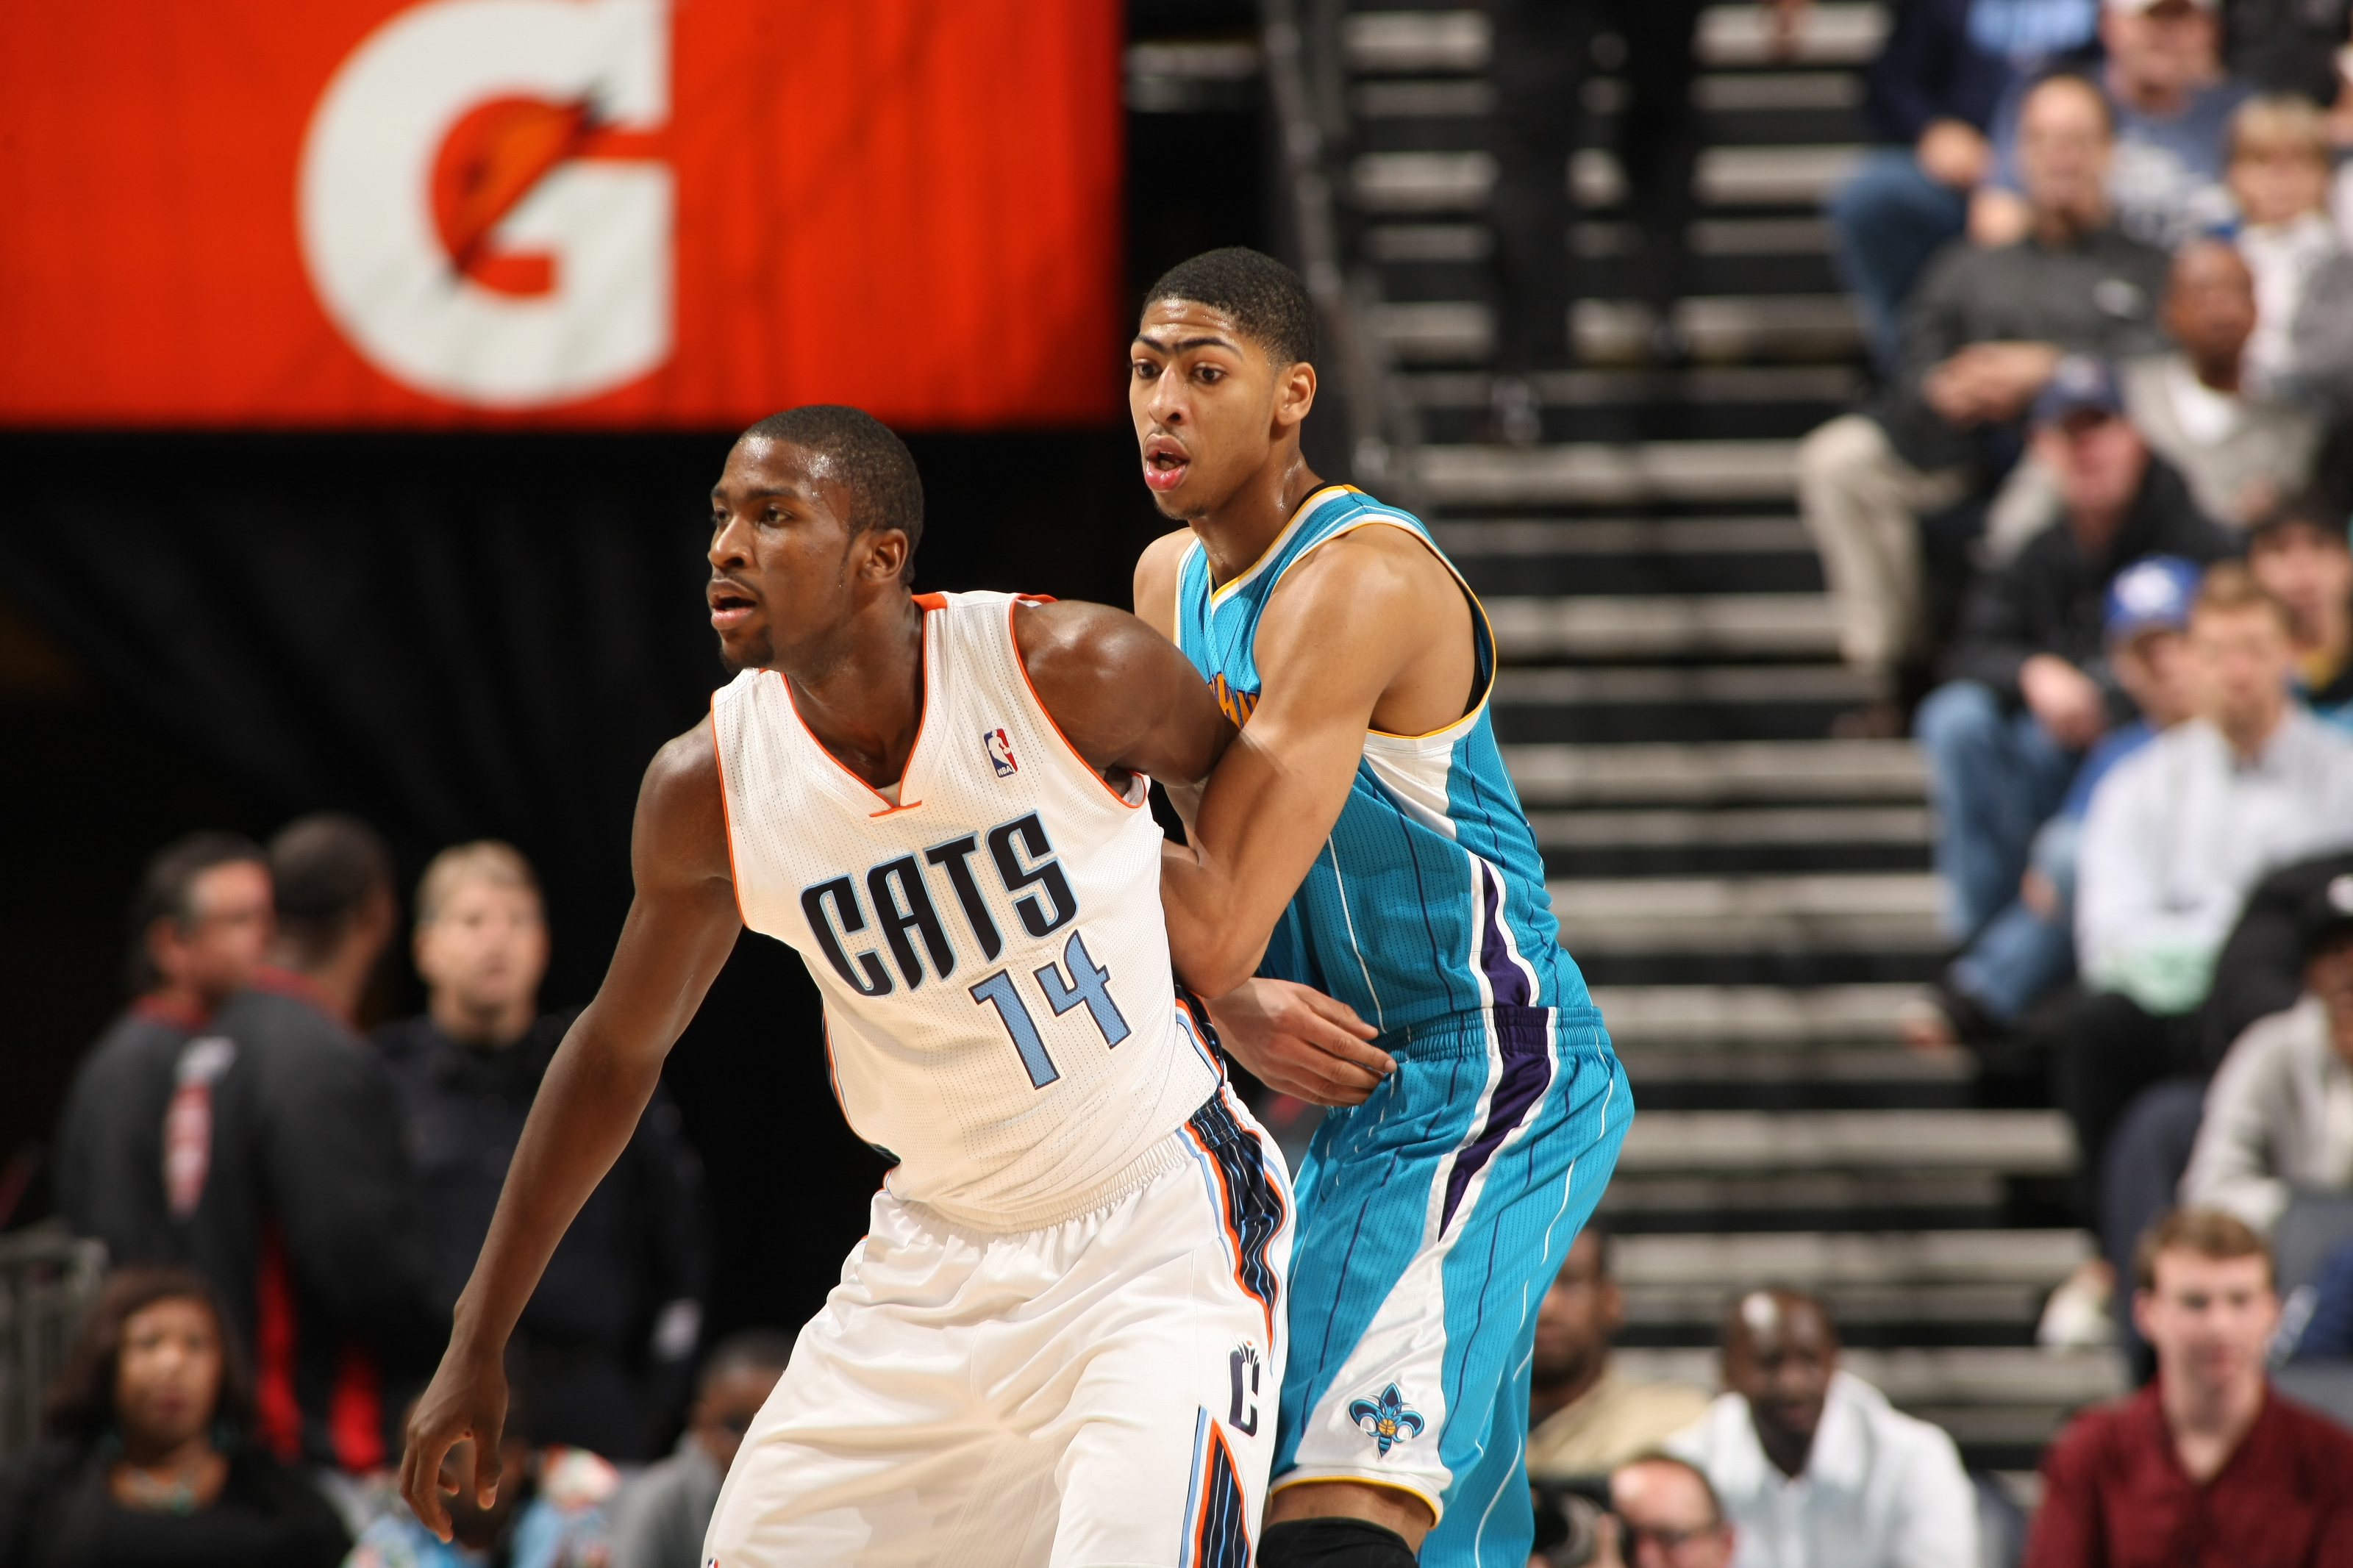 NBA: Charlotte Bobcats at New Orleans Hornets